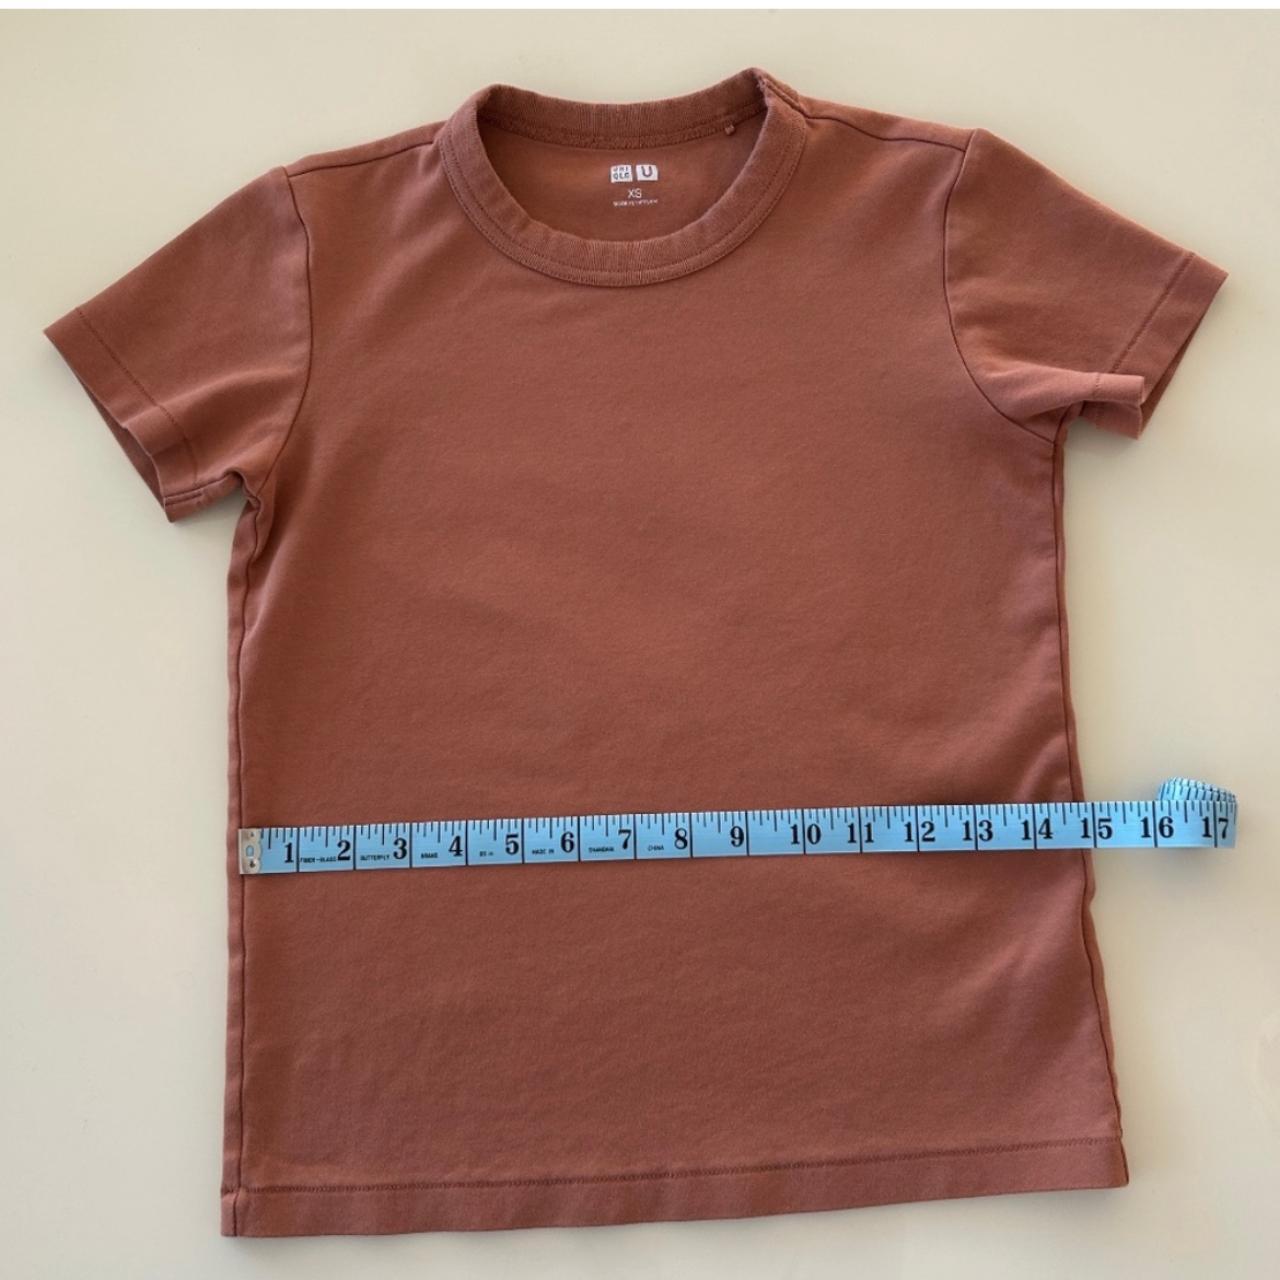 U Crew Neck Short-Sleeve T-Shirt